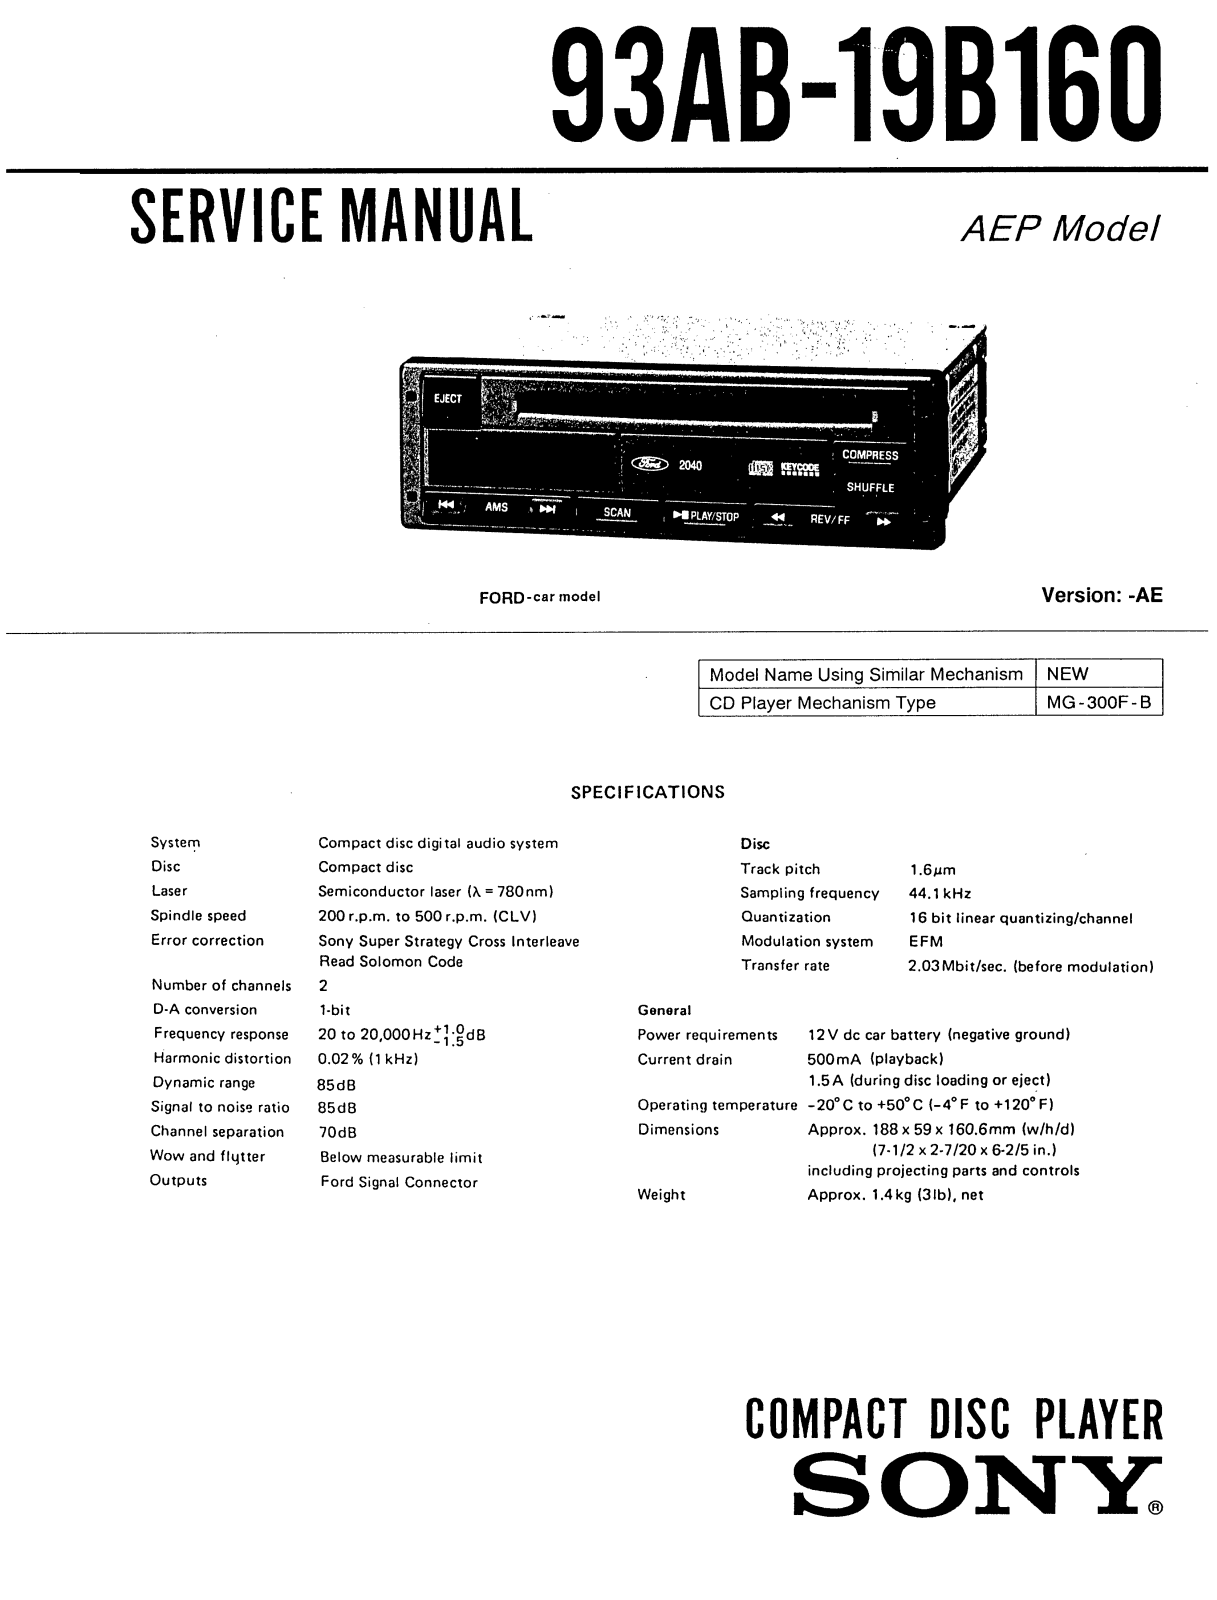 Sony 93AB-19B160 Service Manual